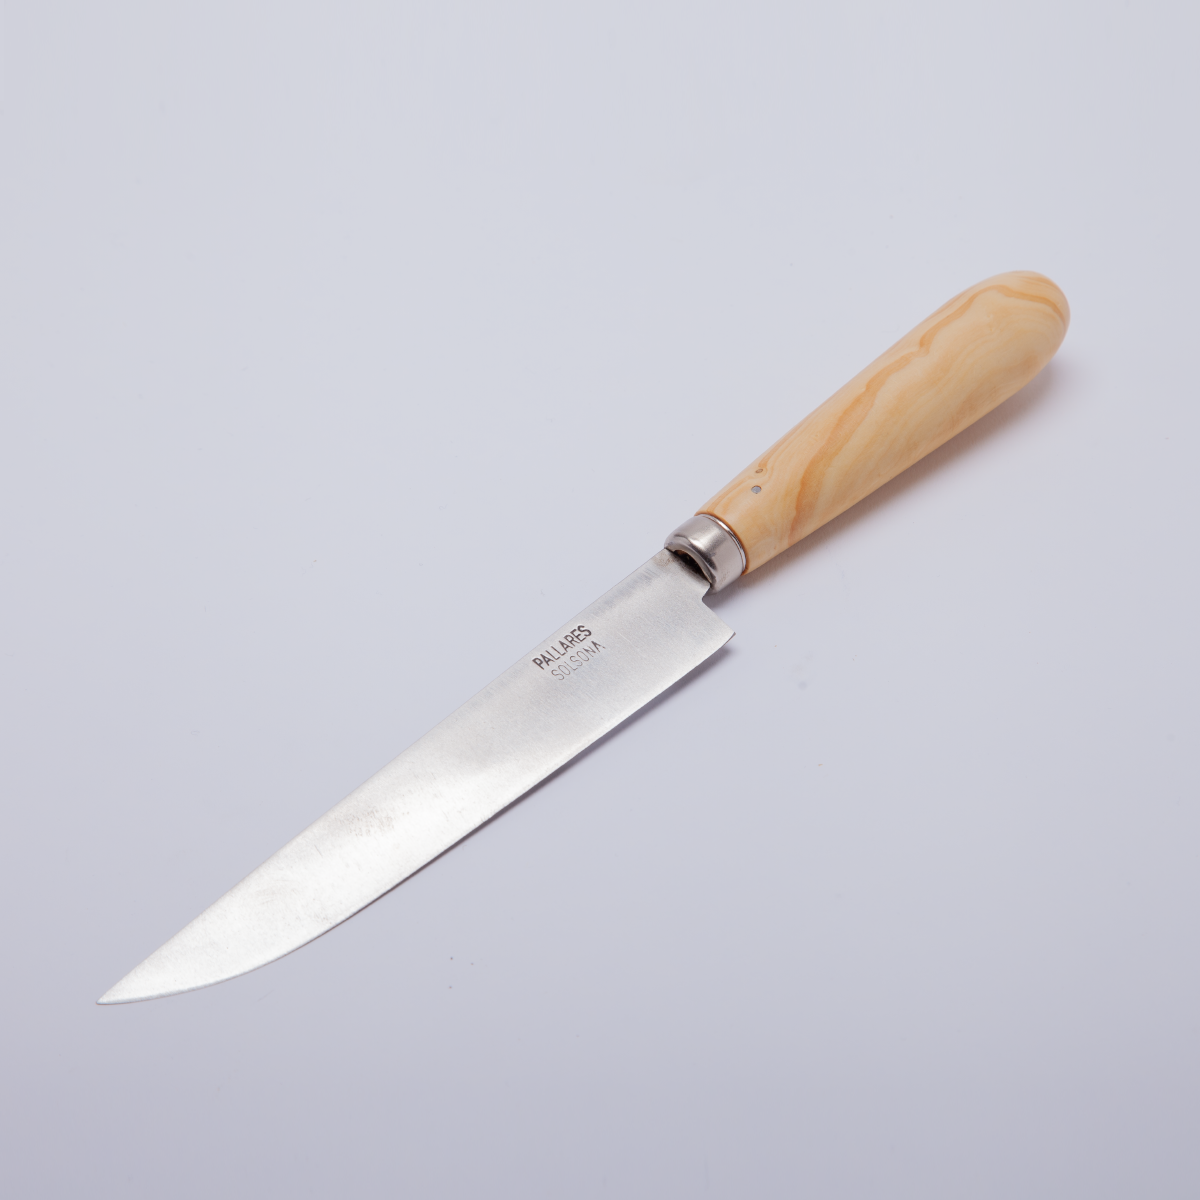 Pallares | Kitchen Knife | Boxwood & Carbon Steel | 15cm